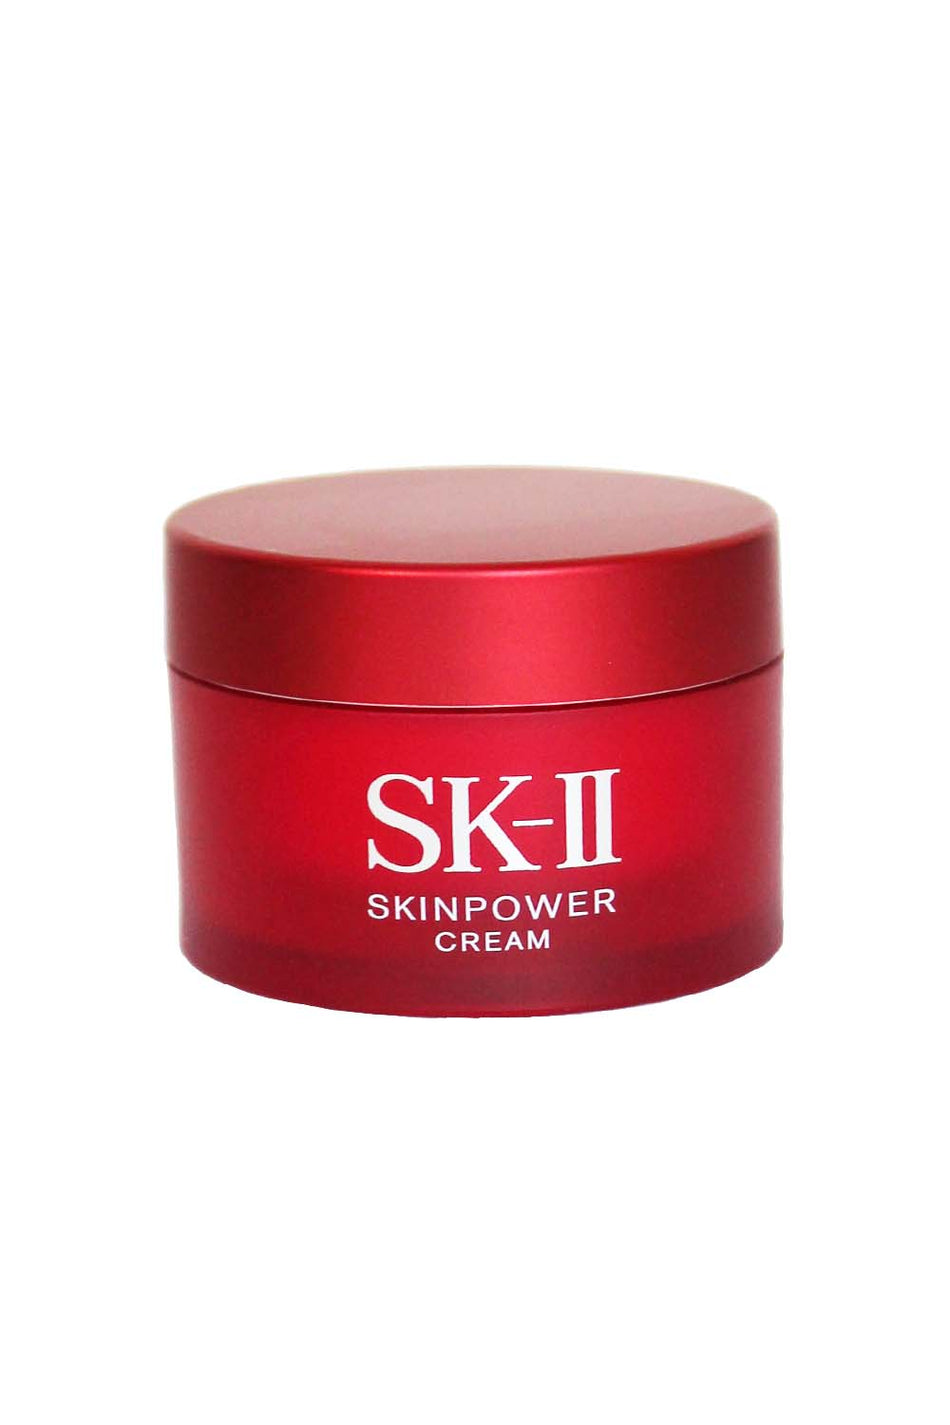 SK-II Skinpower Cream -15g